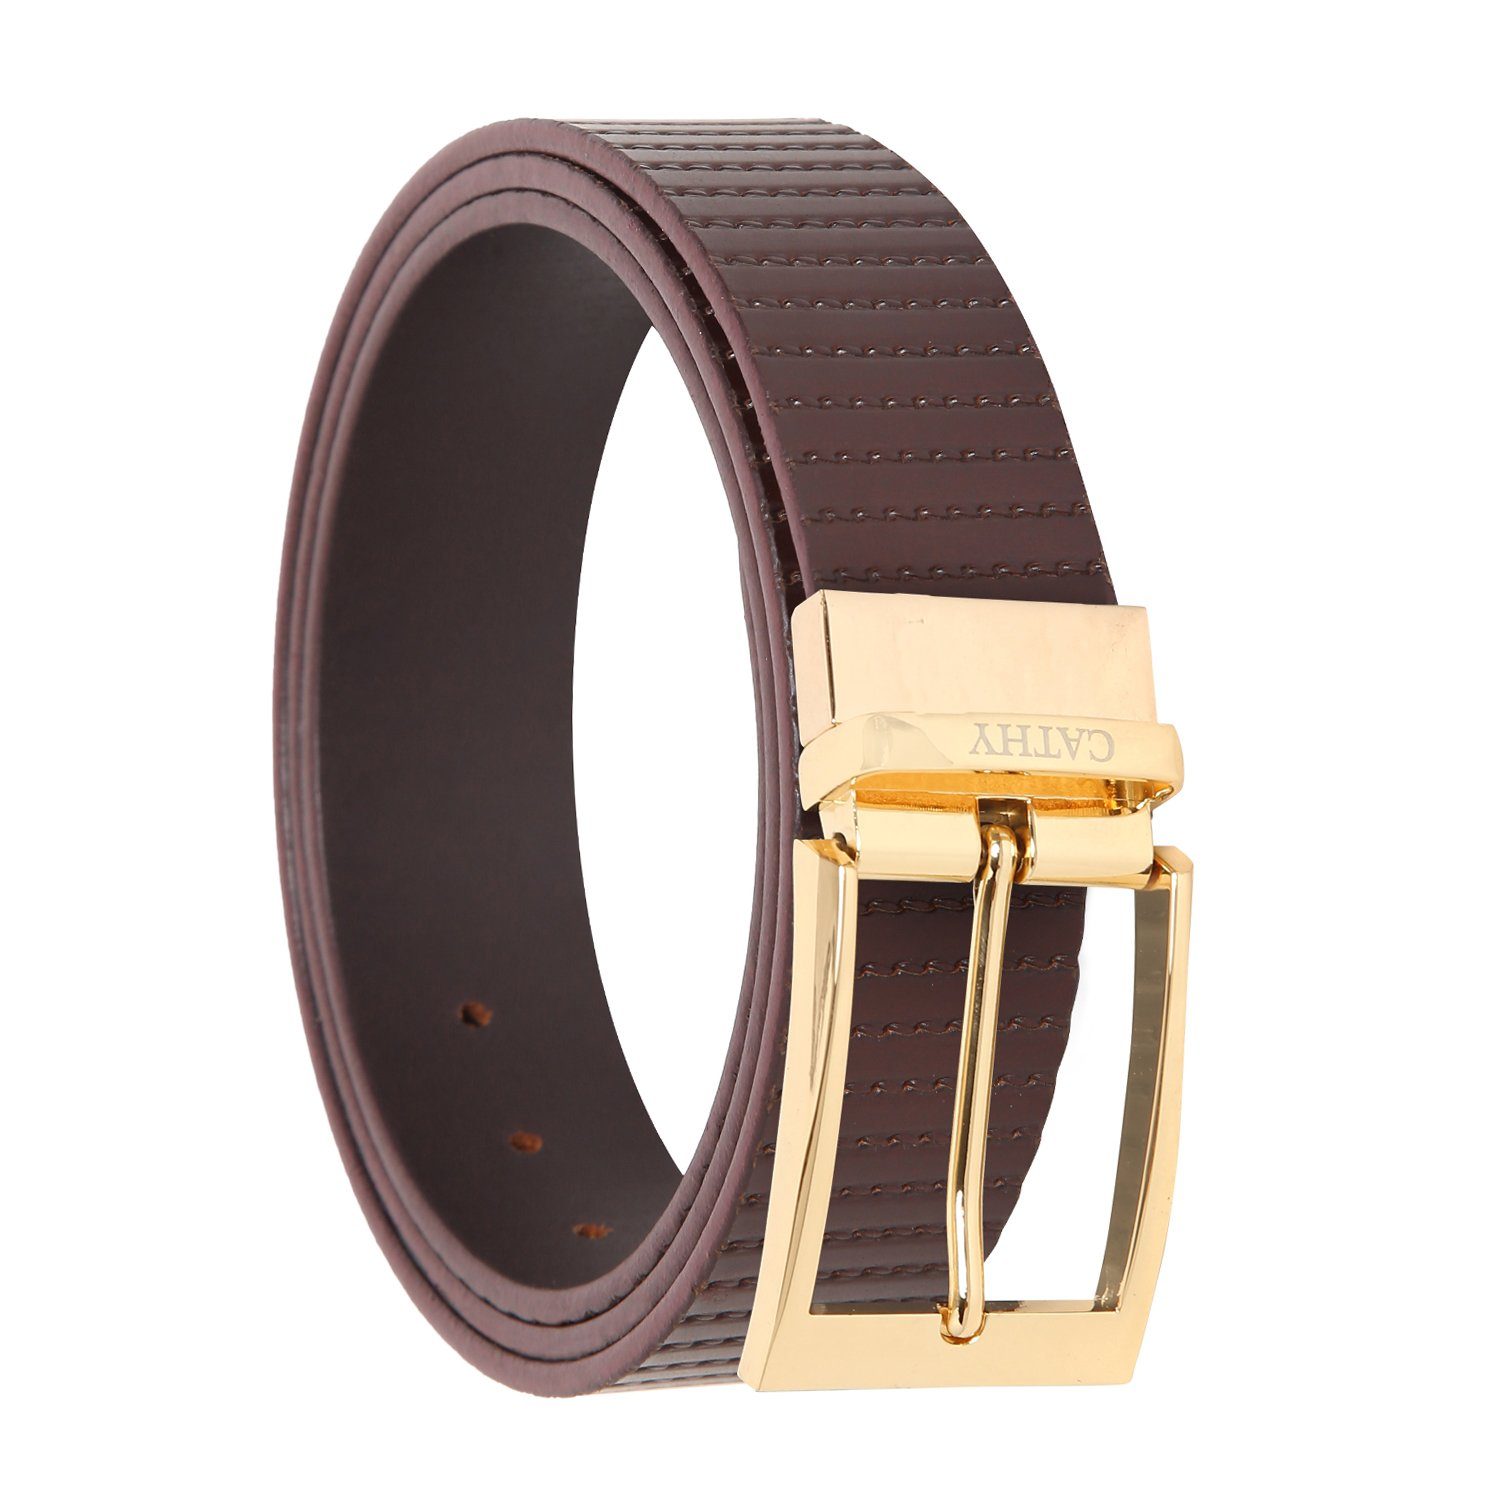 Men's Classic Dress Coffee Colour Belt Top Grain Italian Leather with Golden Metal Buckle Cathy-London 